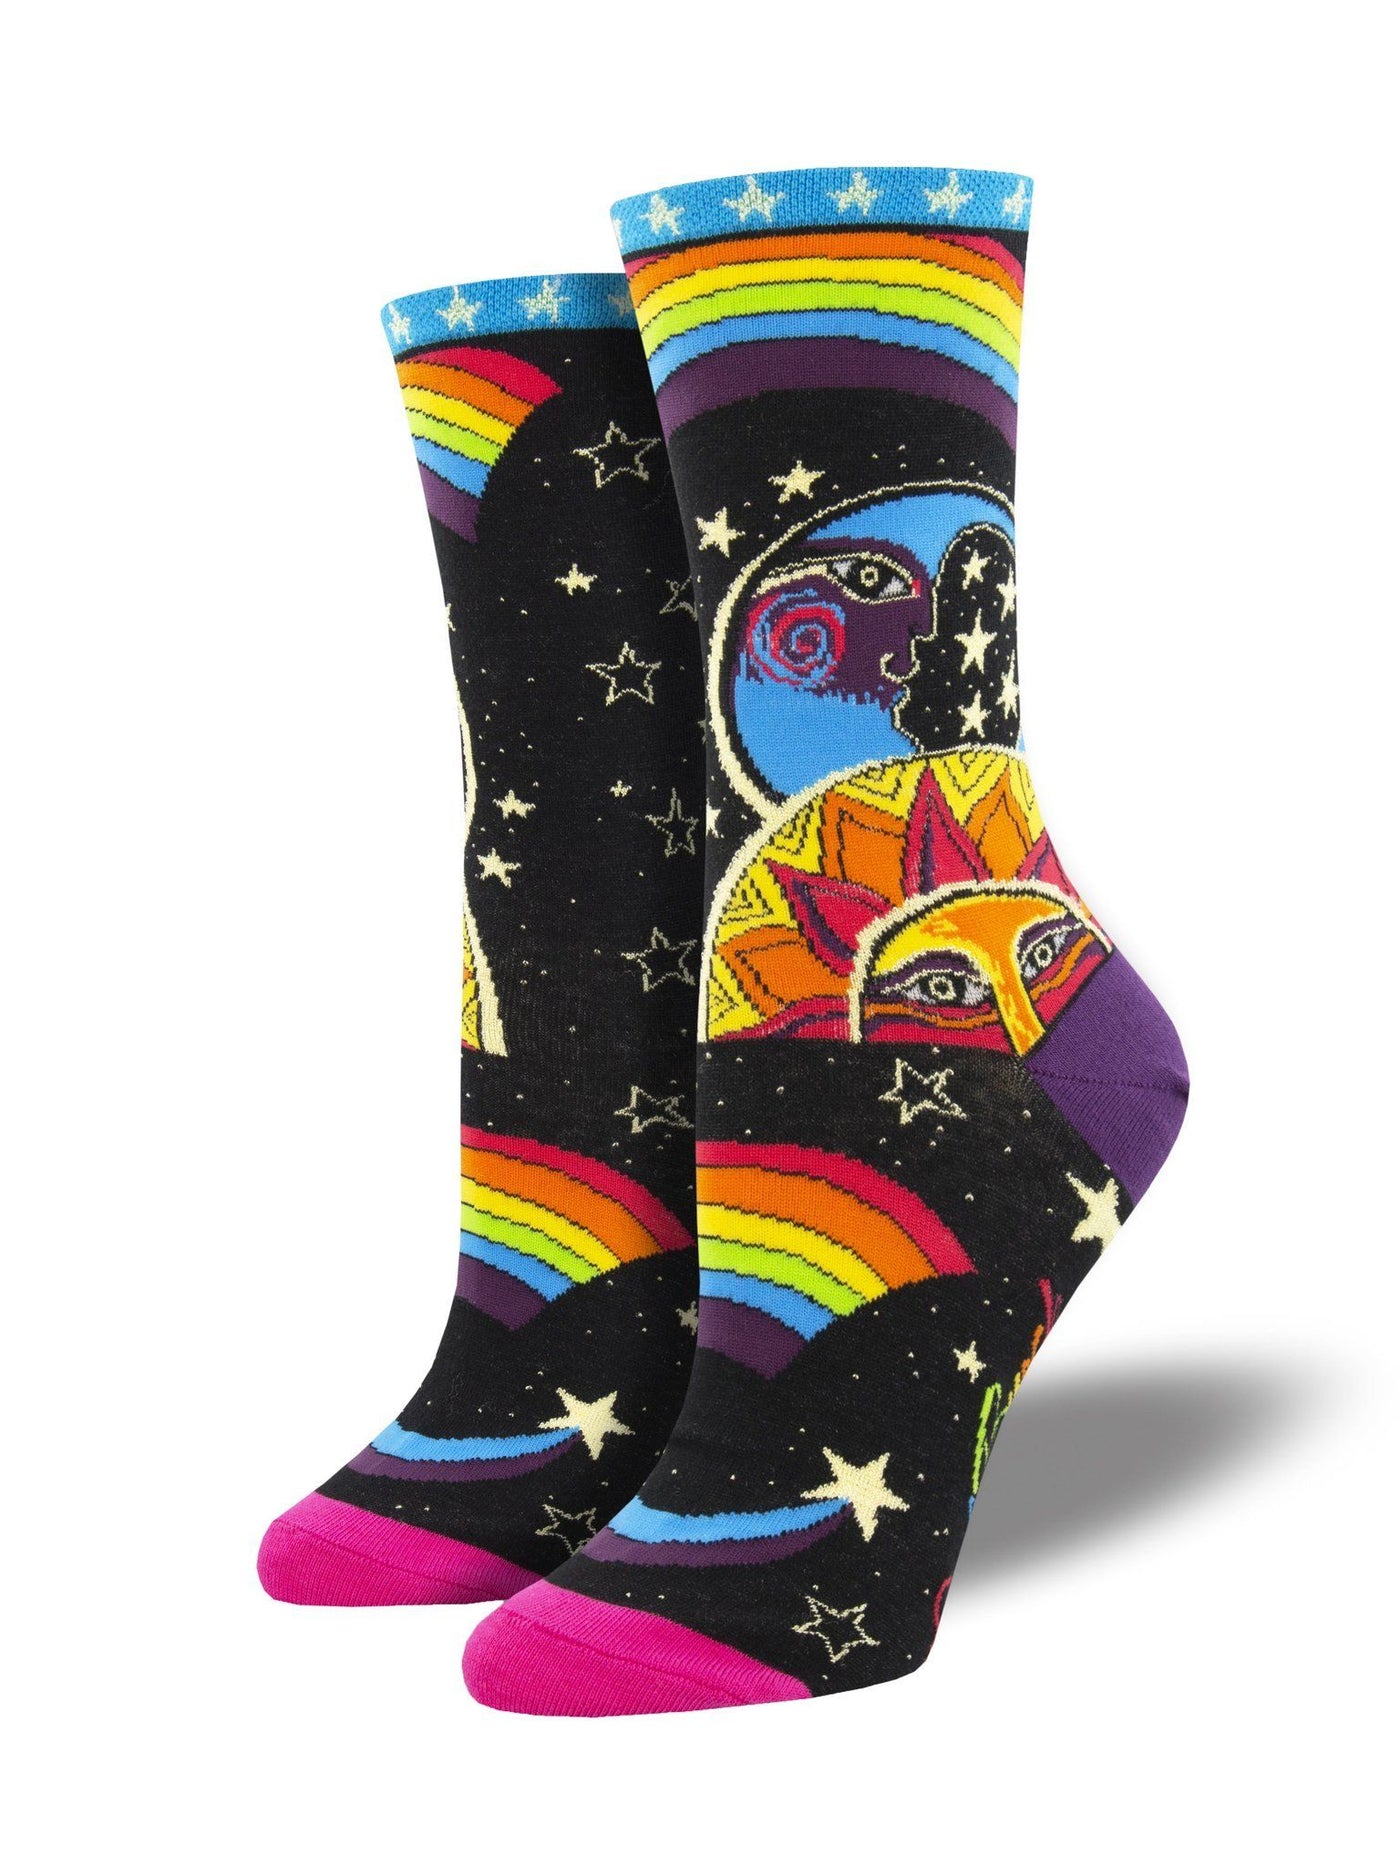 Socksmith - Laurel Burch: Celestial Joy Crew Socks | Women's - Knock Your Socks Off